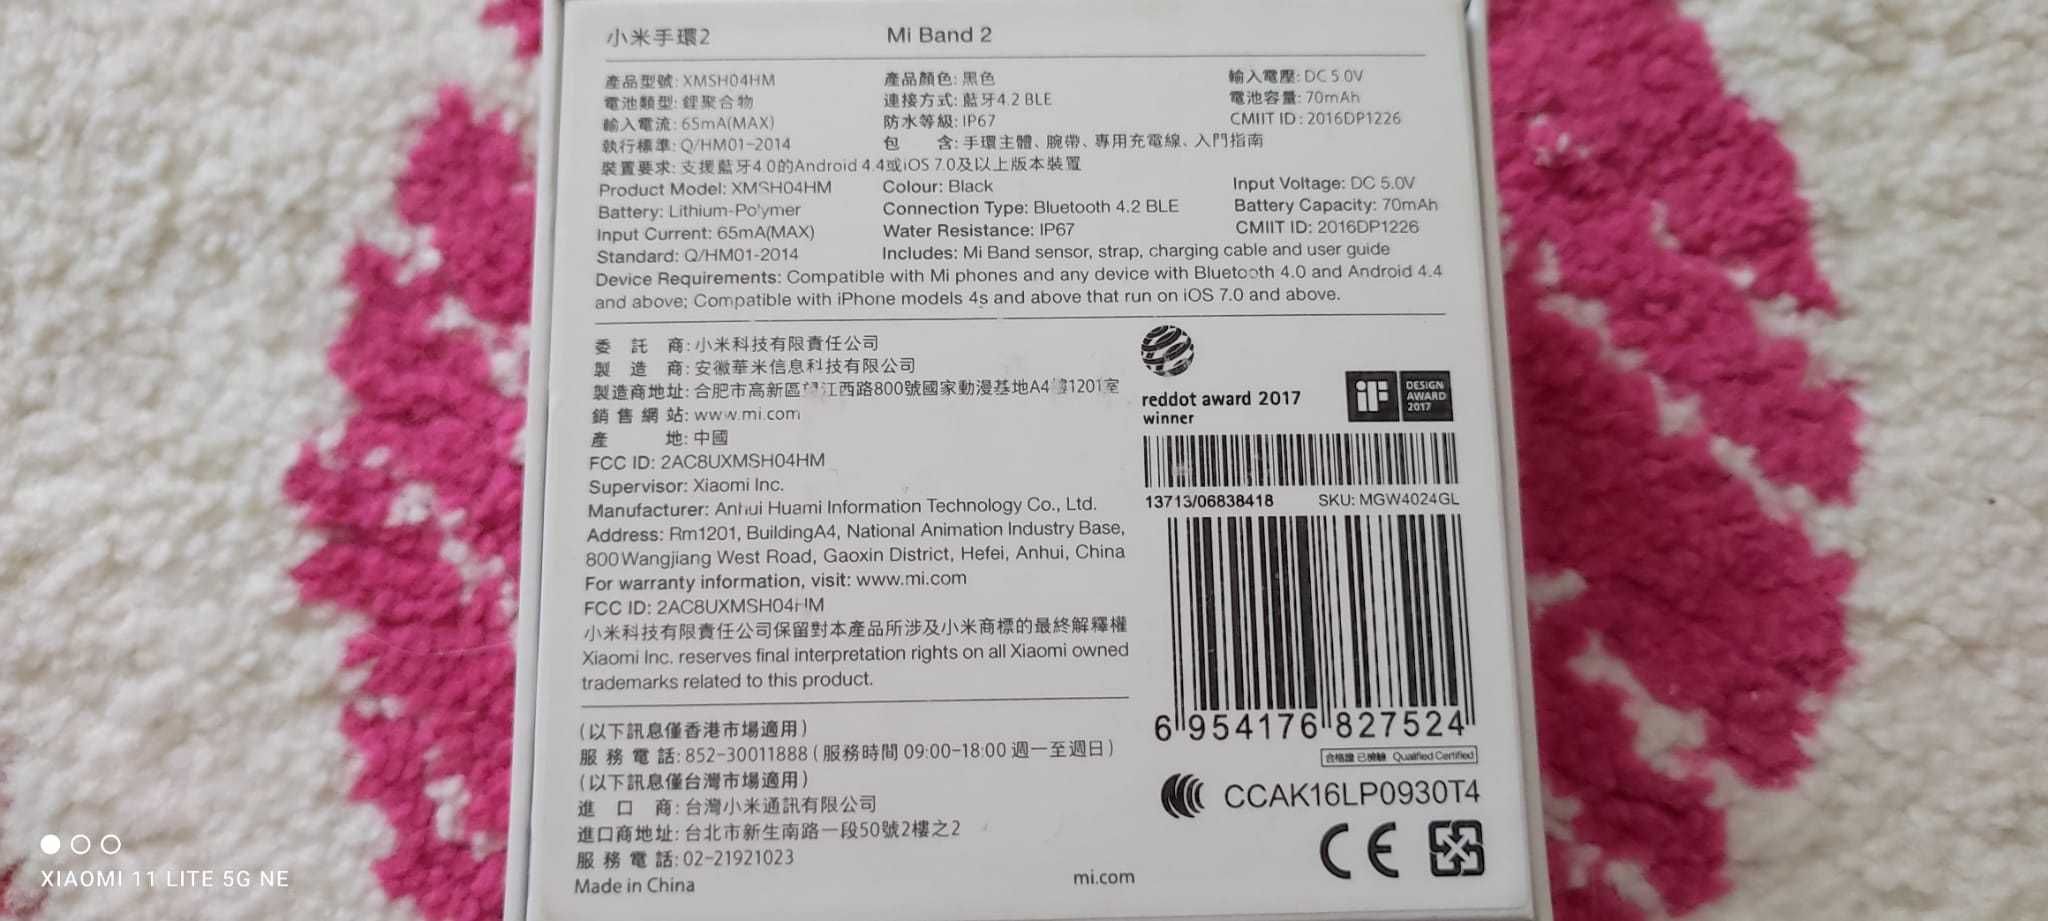 Xiaomi MiBand 2, ceas/bratara fitness  - fara curea!